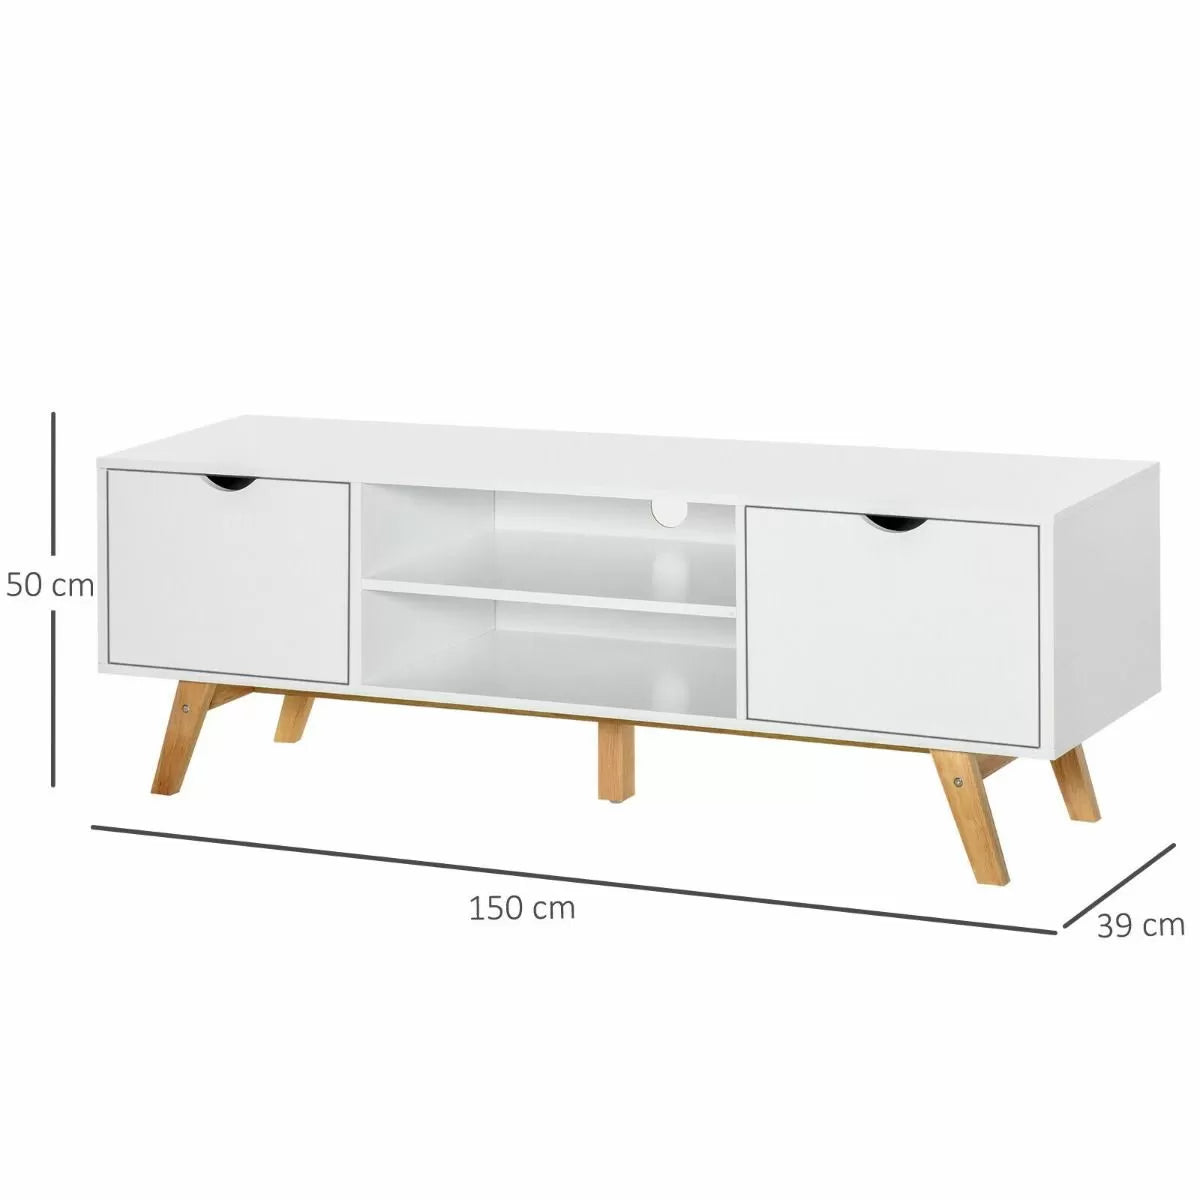 Elegant TV Stand With Storage Unit Wood Legs - White